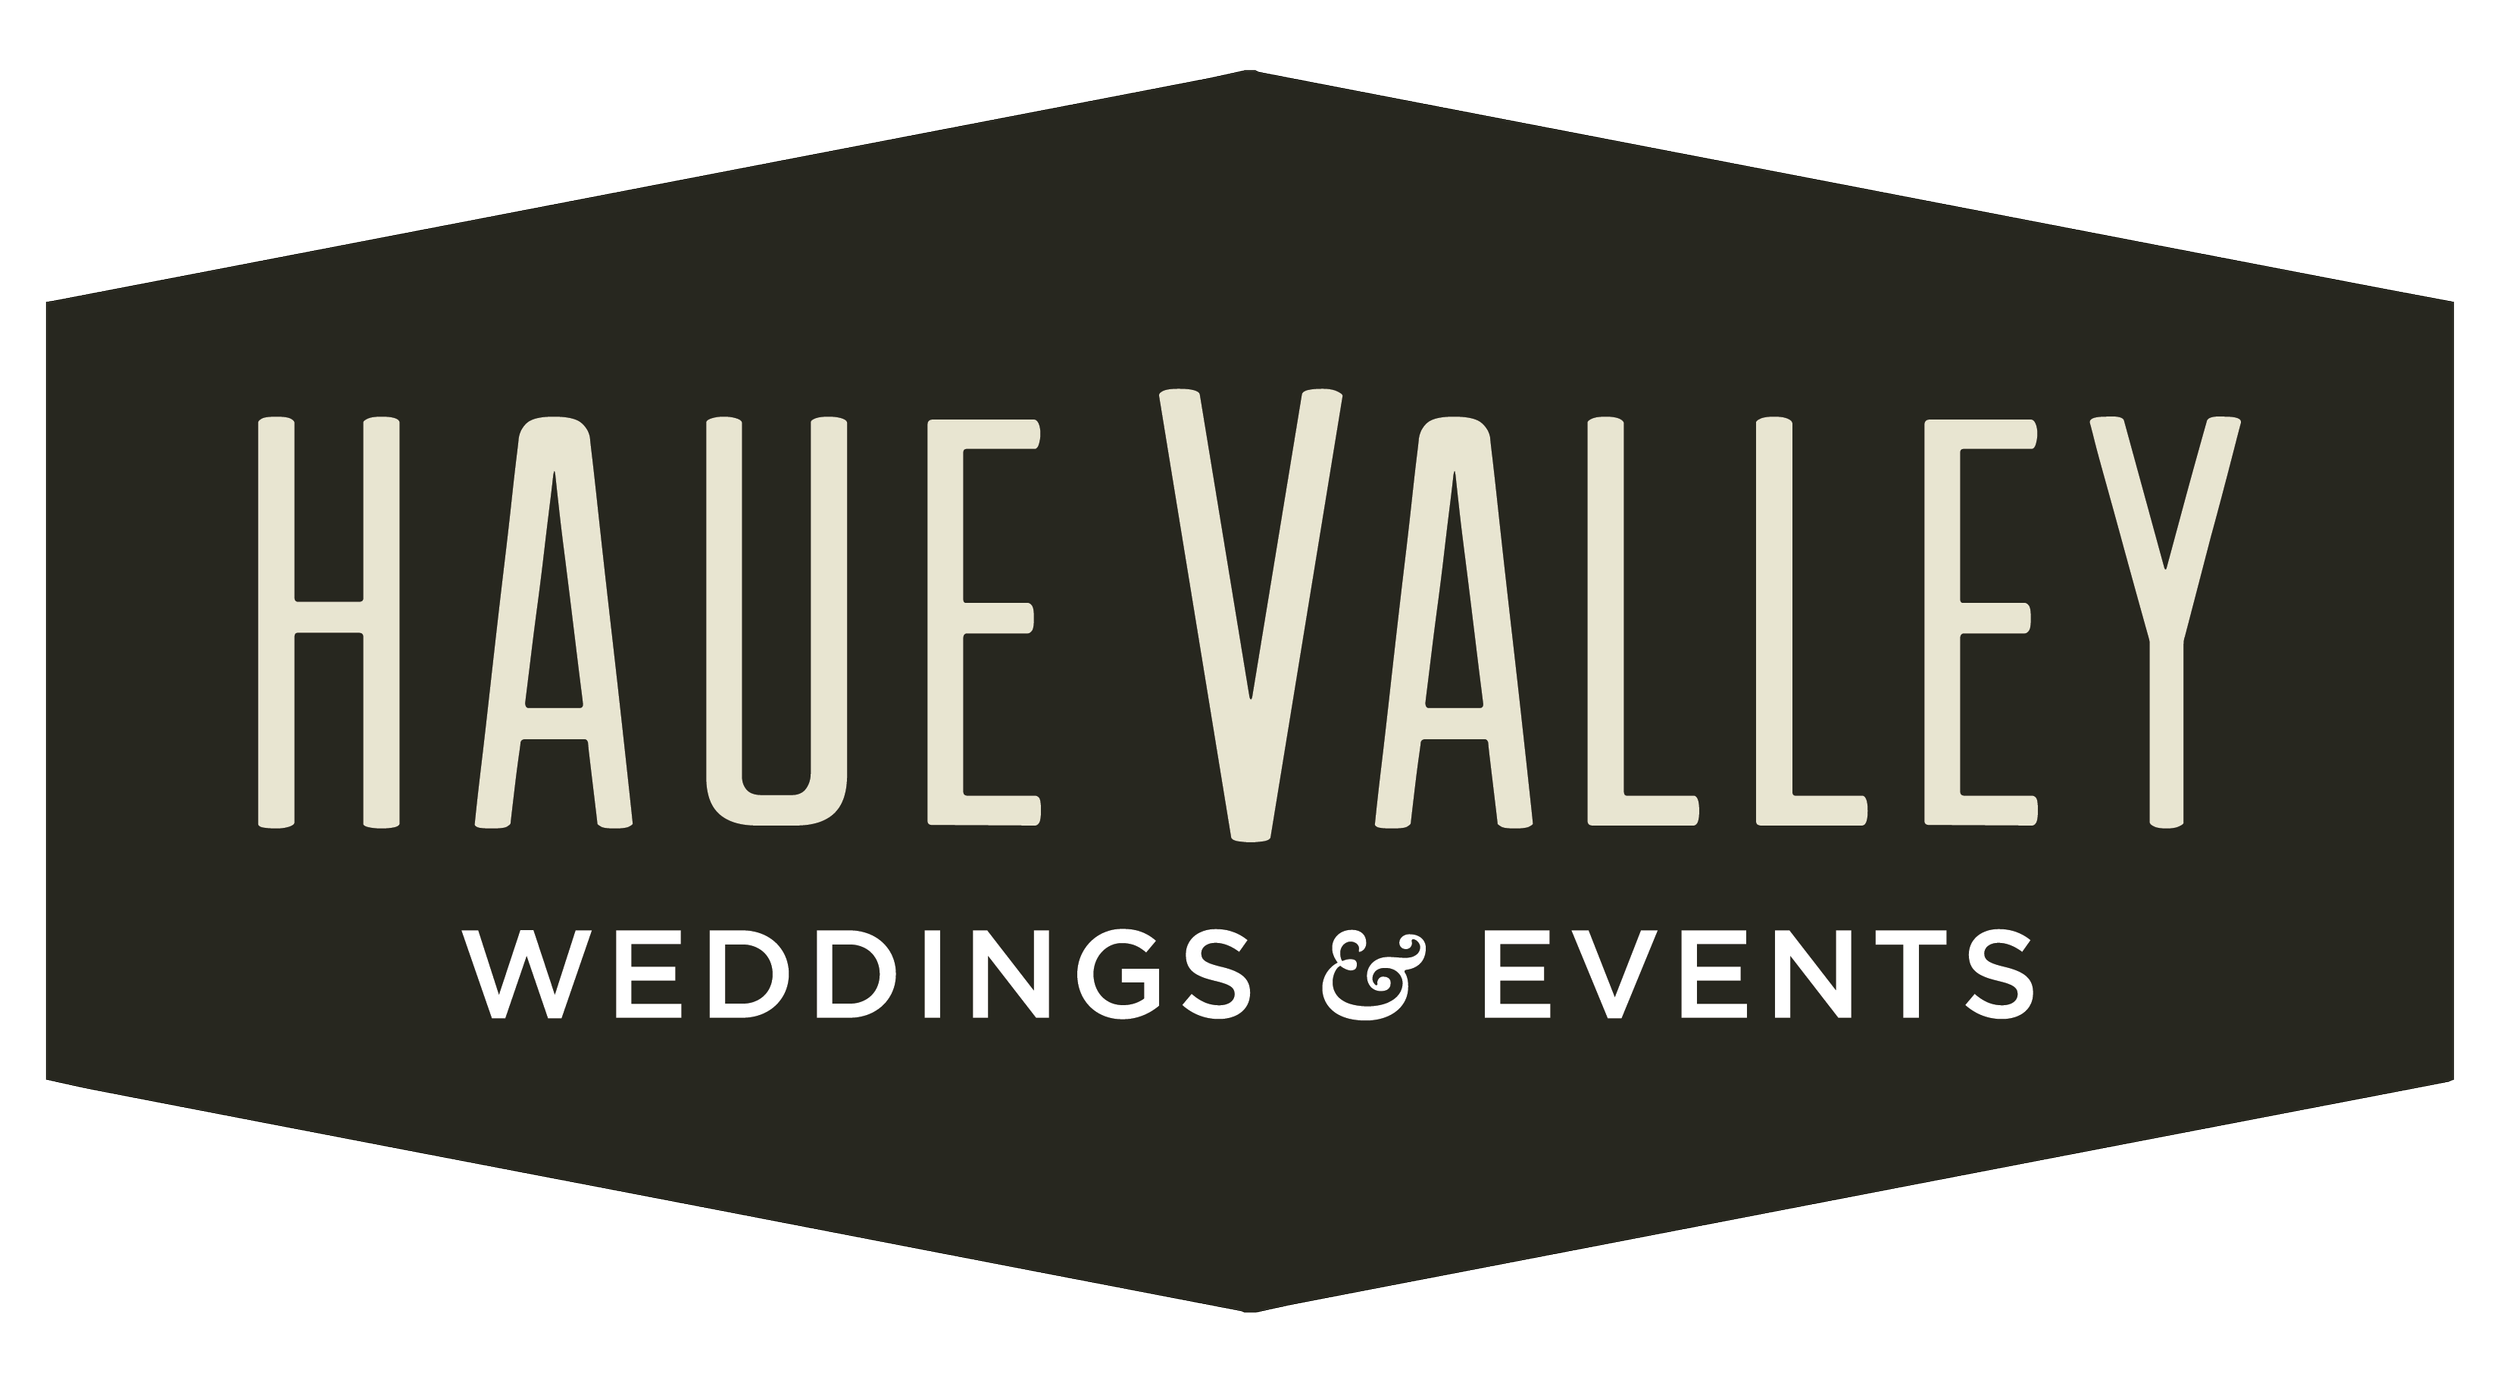 Haue Valley: St. Louis Wedding Venues